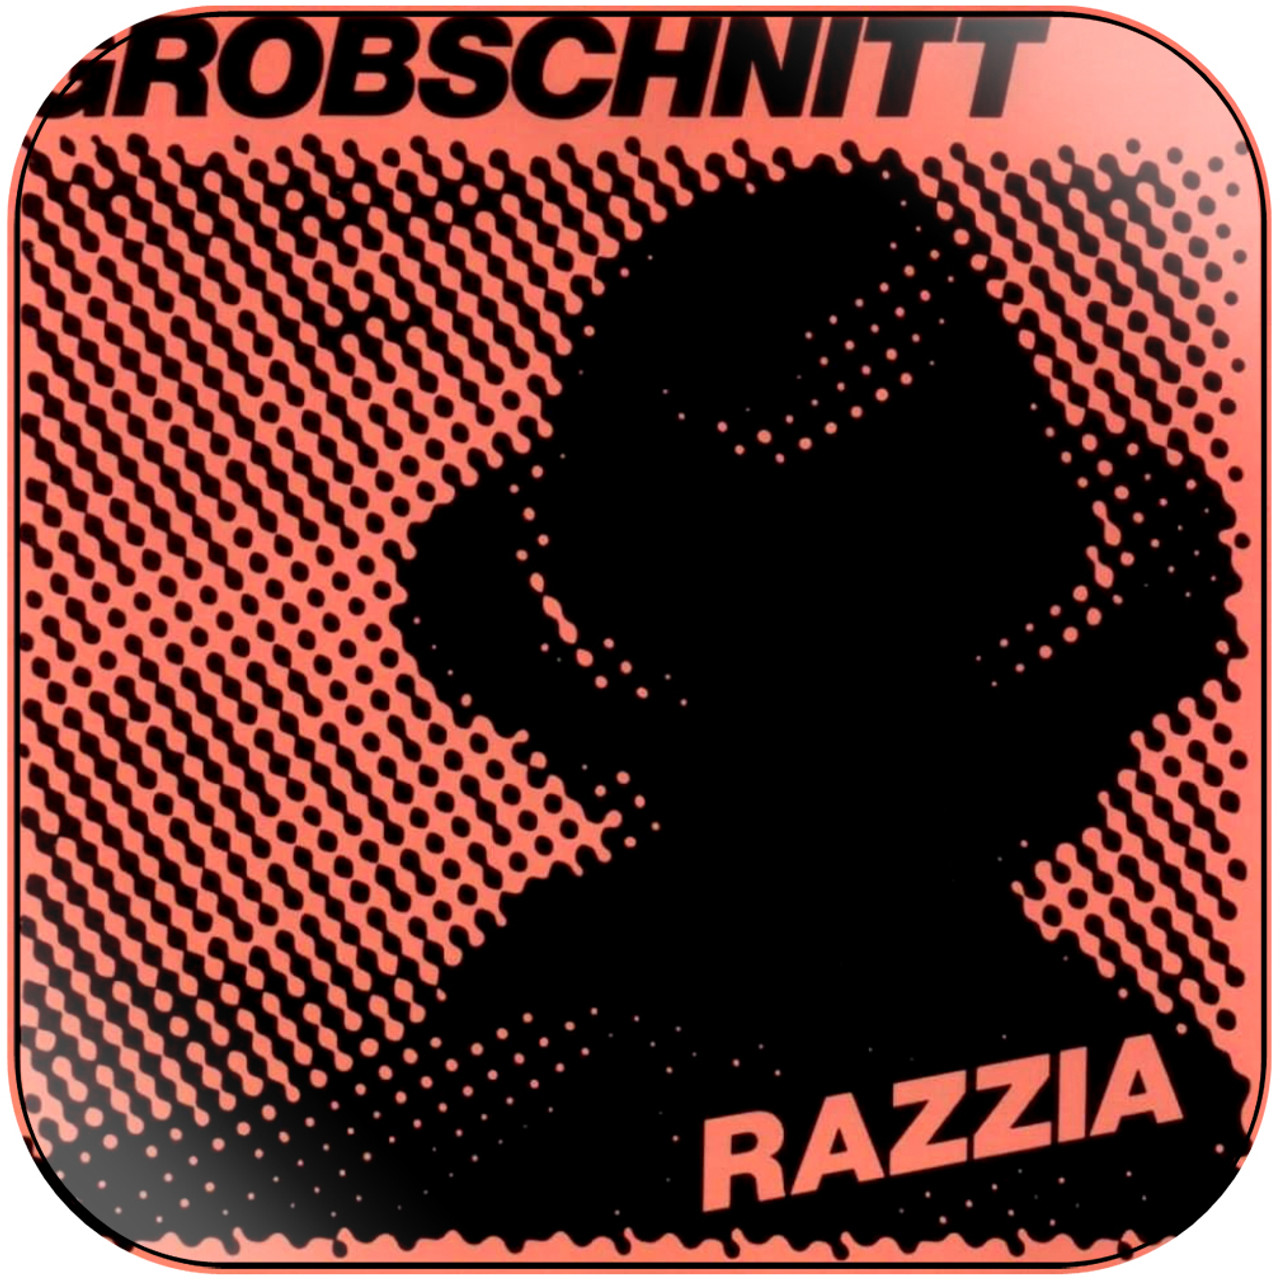 Grobschnitt - Razzia Album Cover Sticker